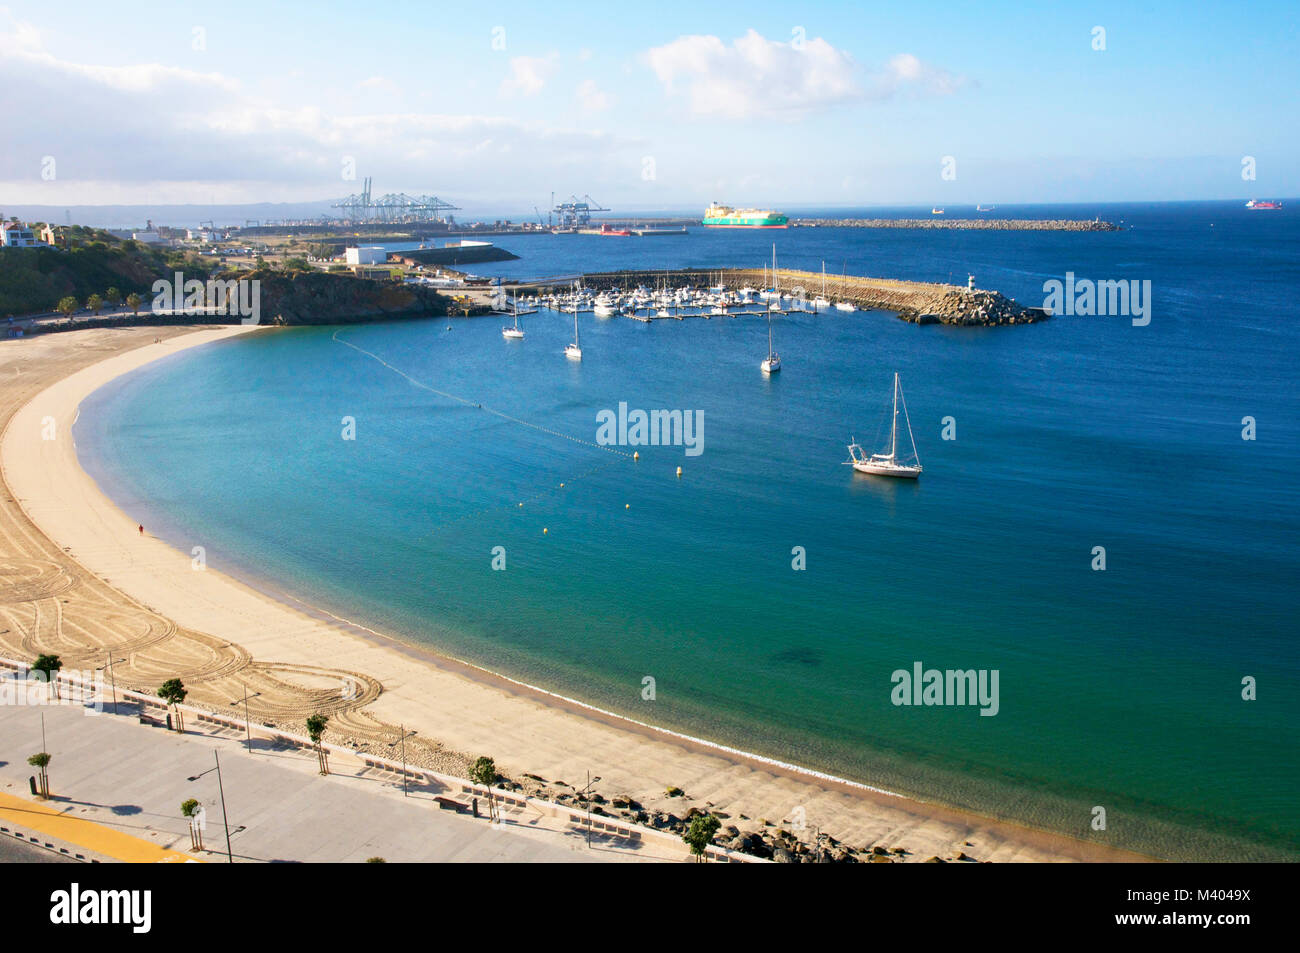 Praia Vasco da Gama, porto di Sines Foto stock - Alamy